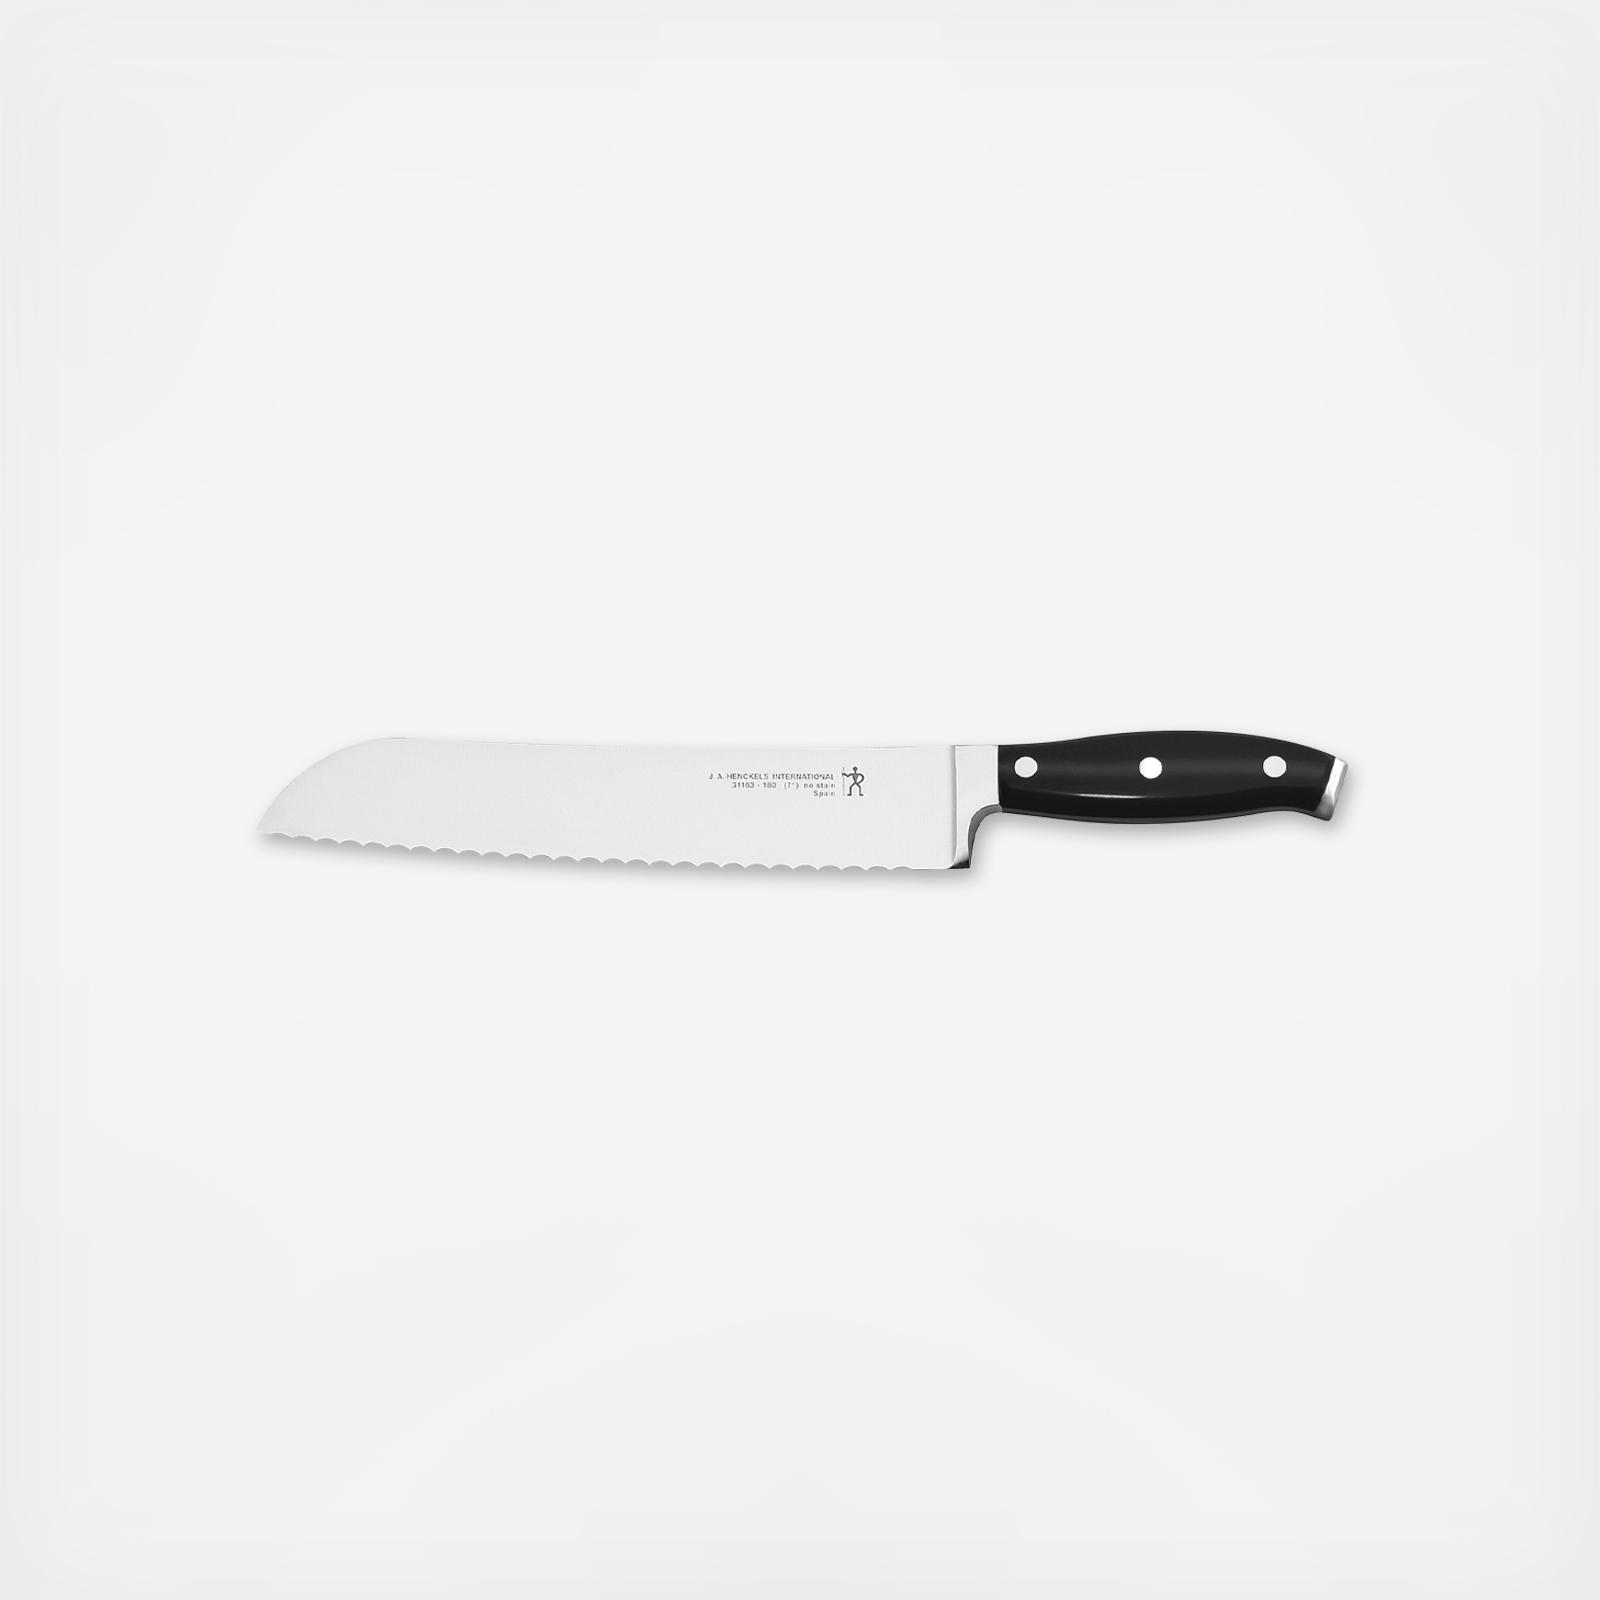 Henckels Classic Precision Starter Knife Set, 3-pc - Baker's